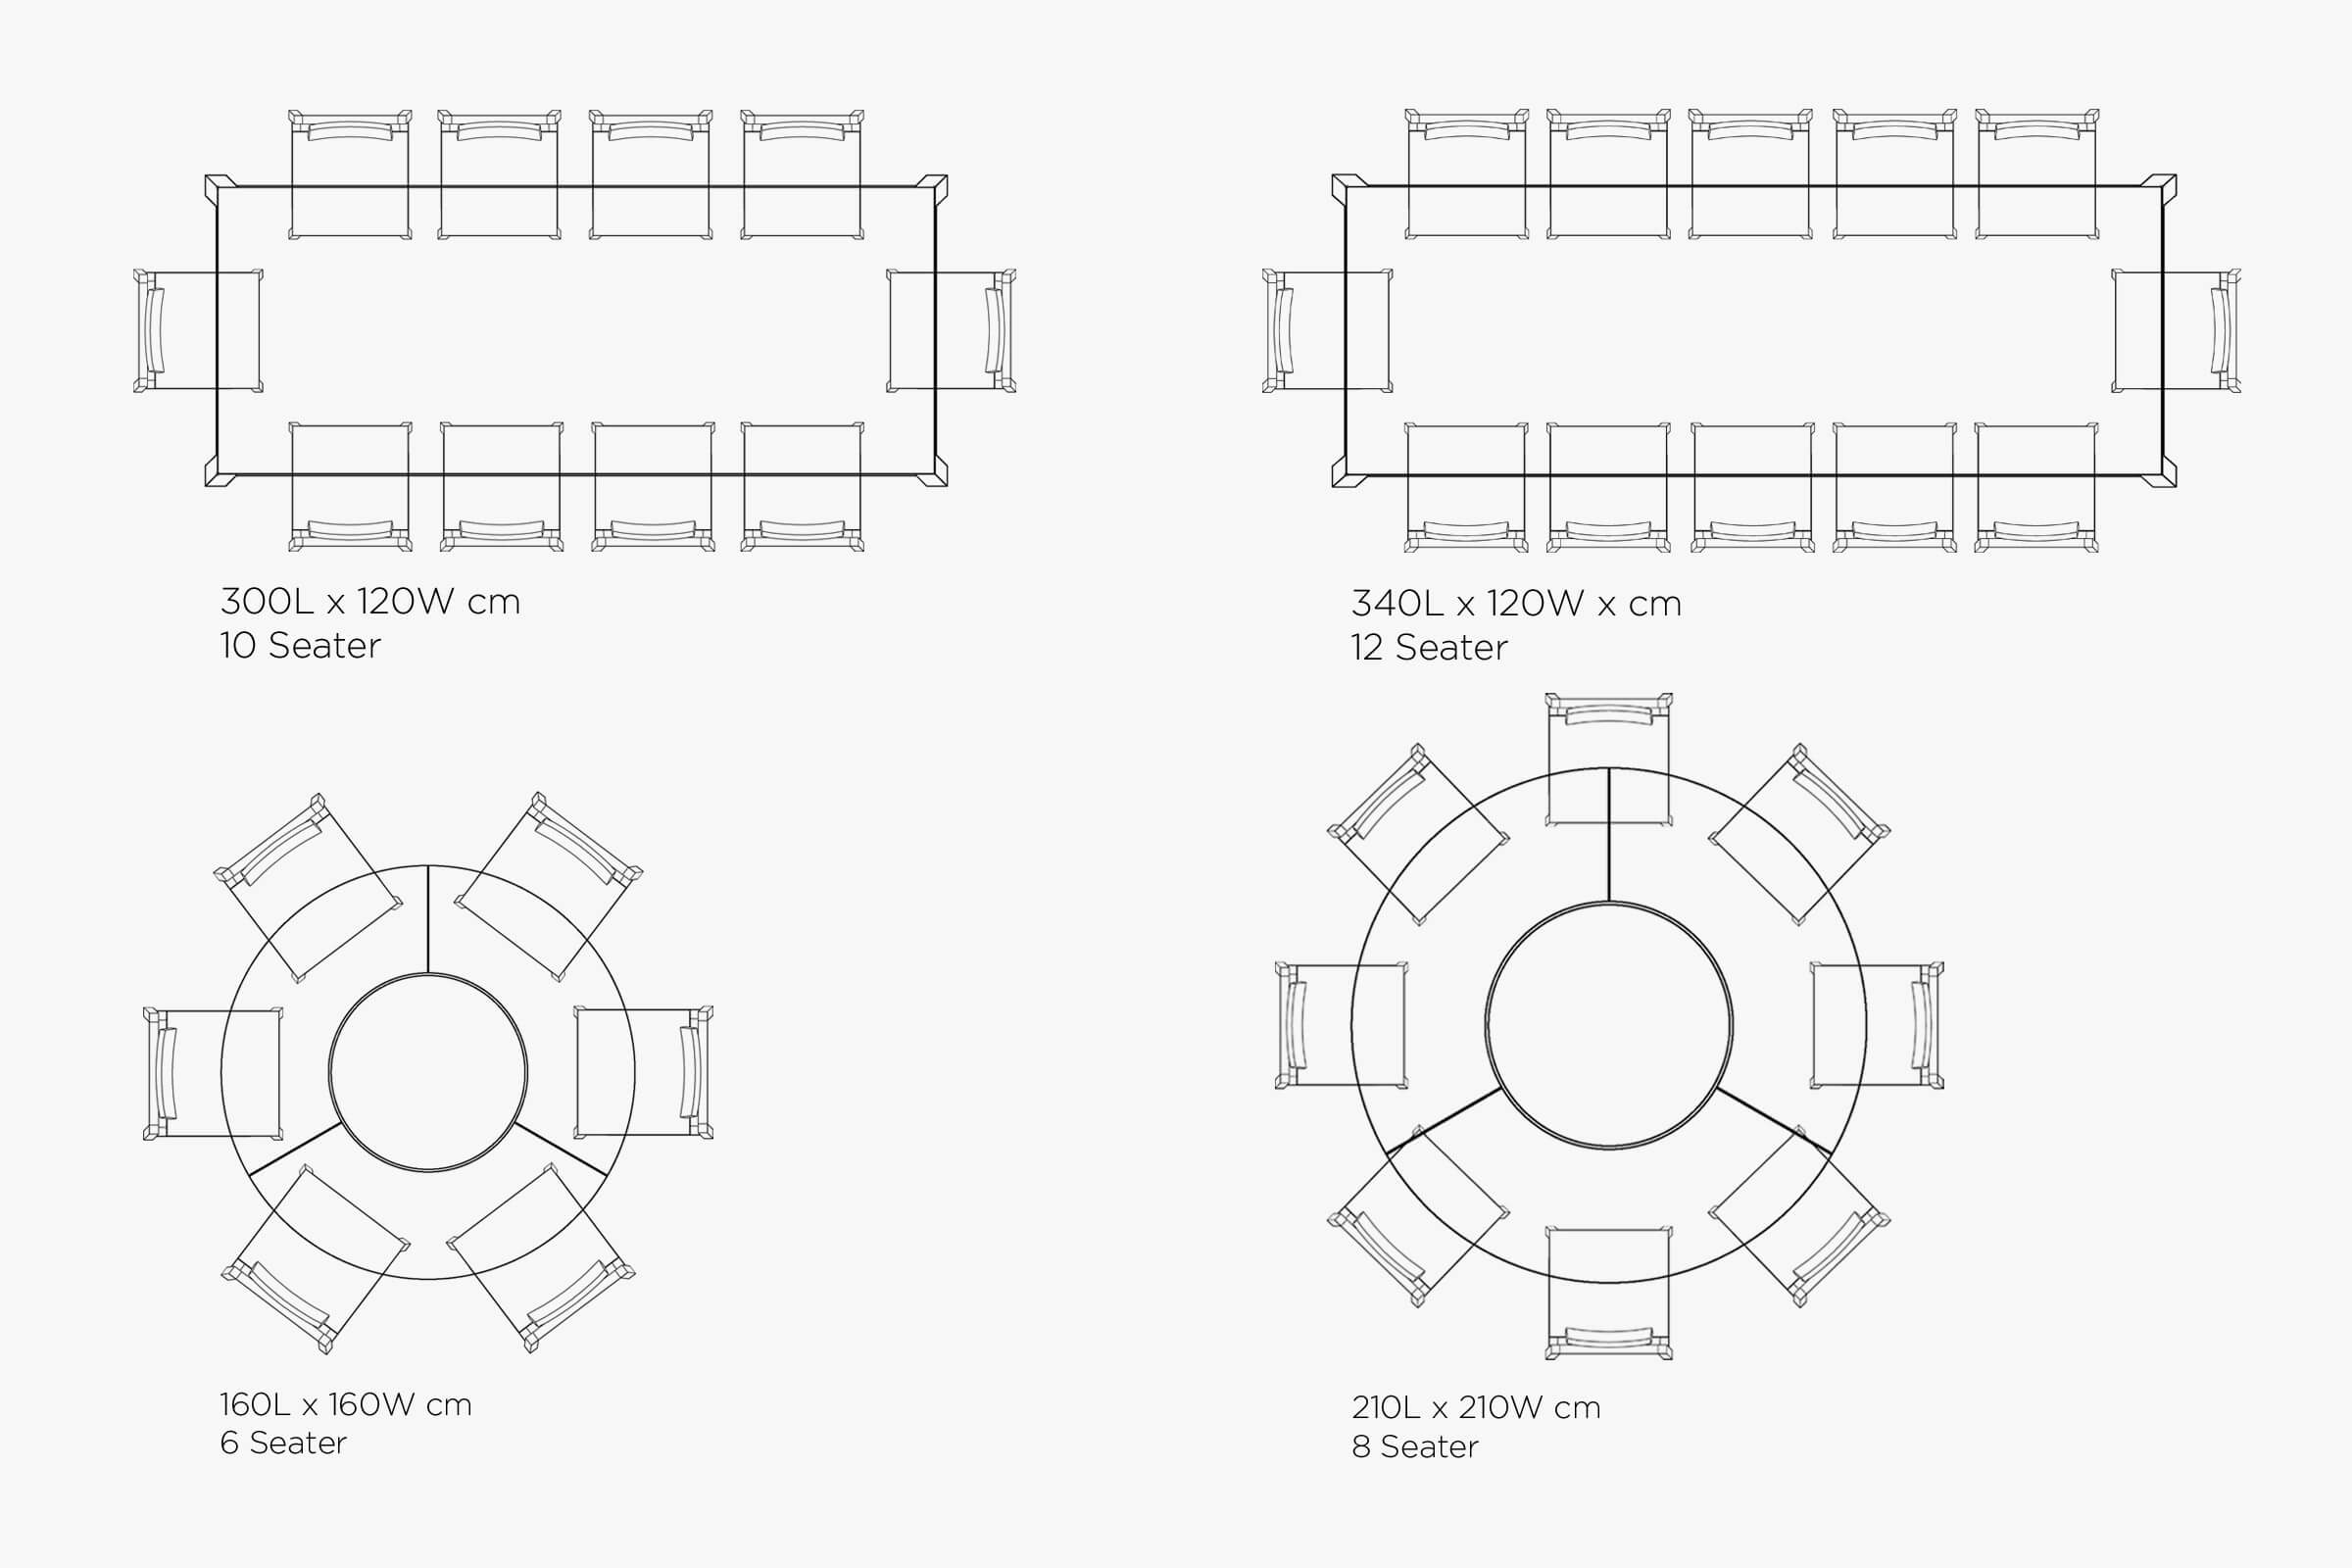 table size guide by Australian designer FrancoCrea designed to make decisions easier